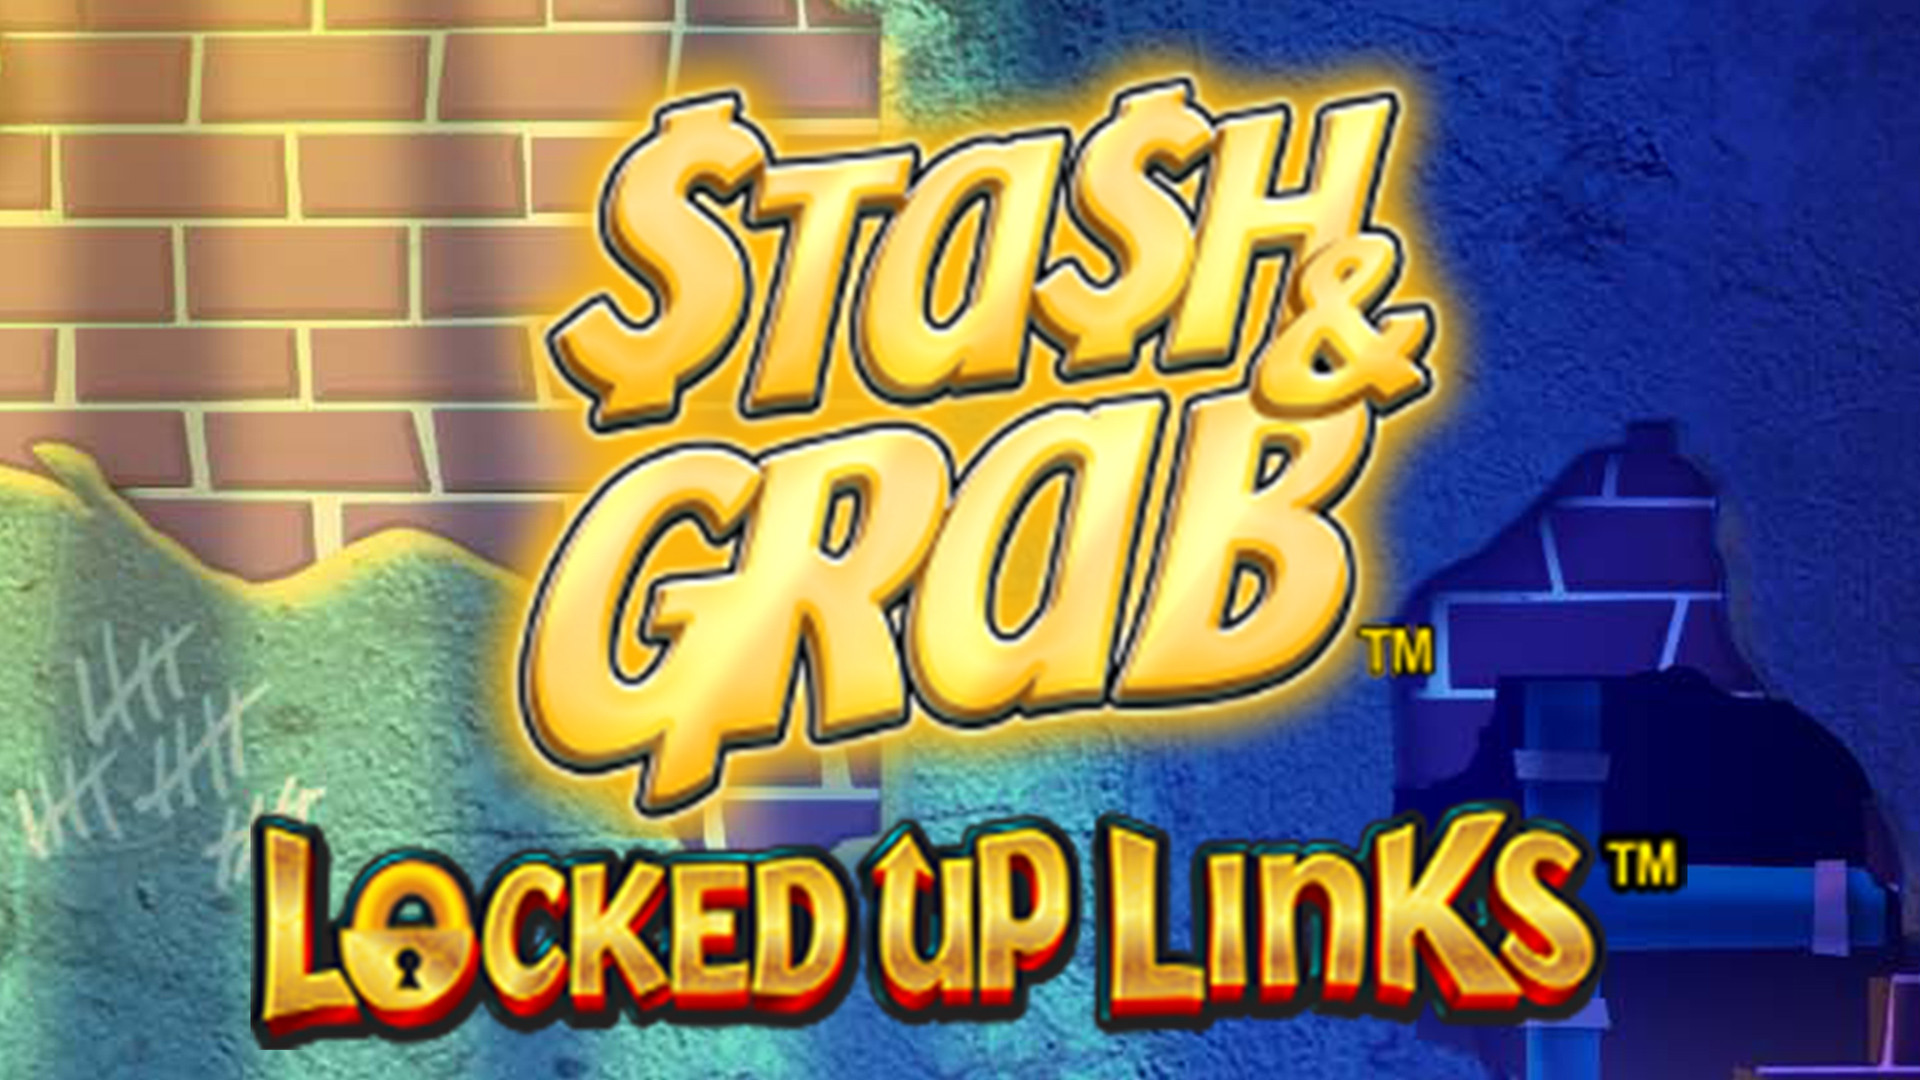 Stash & Grab Locked up Links